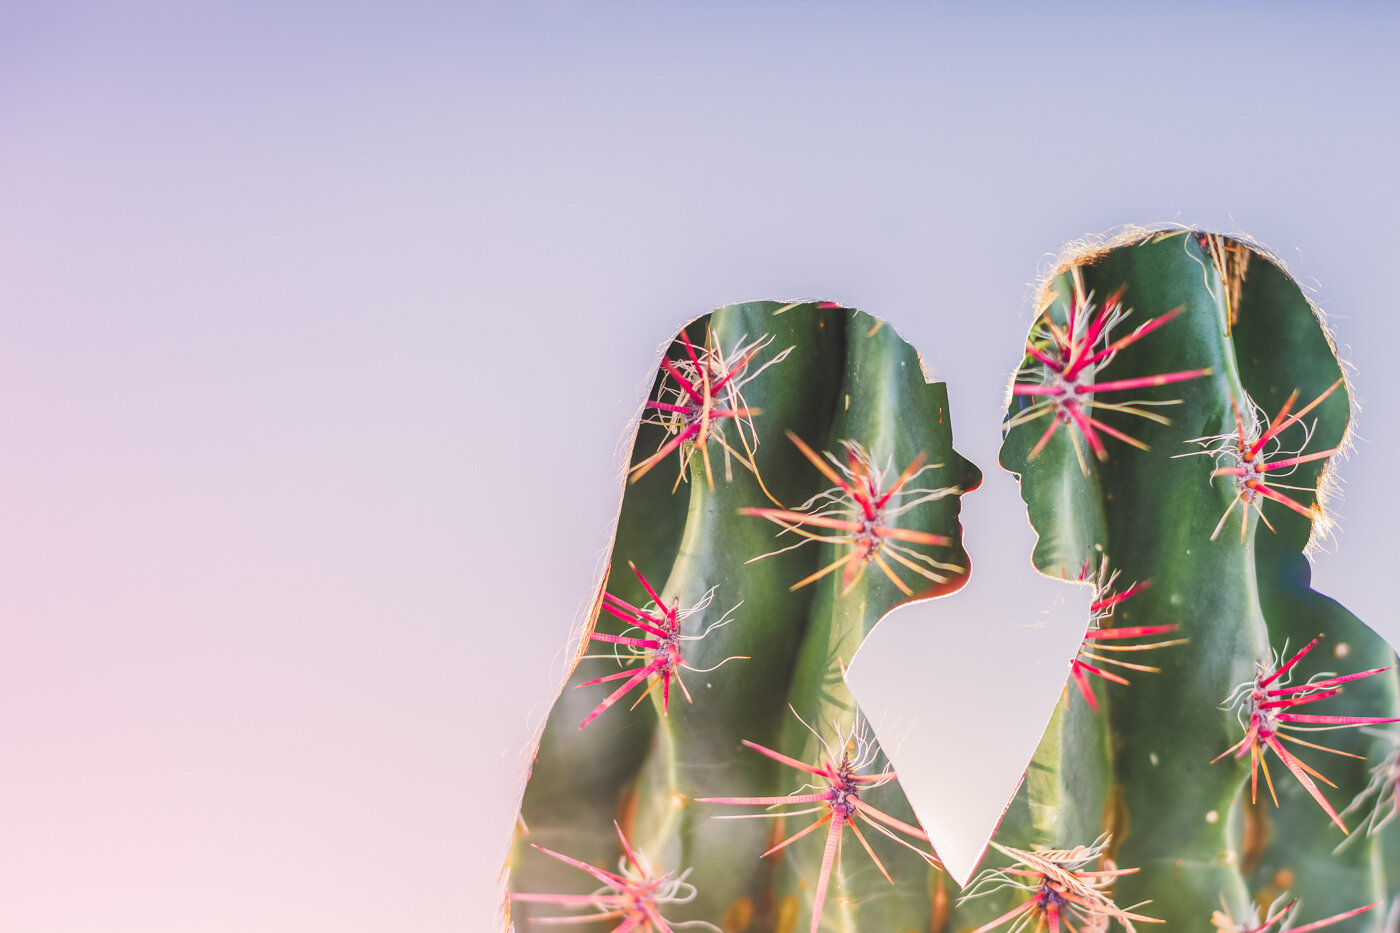 cactus-double-exposure-engagement-photo